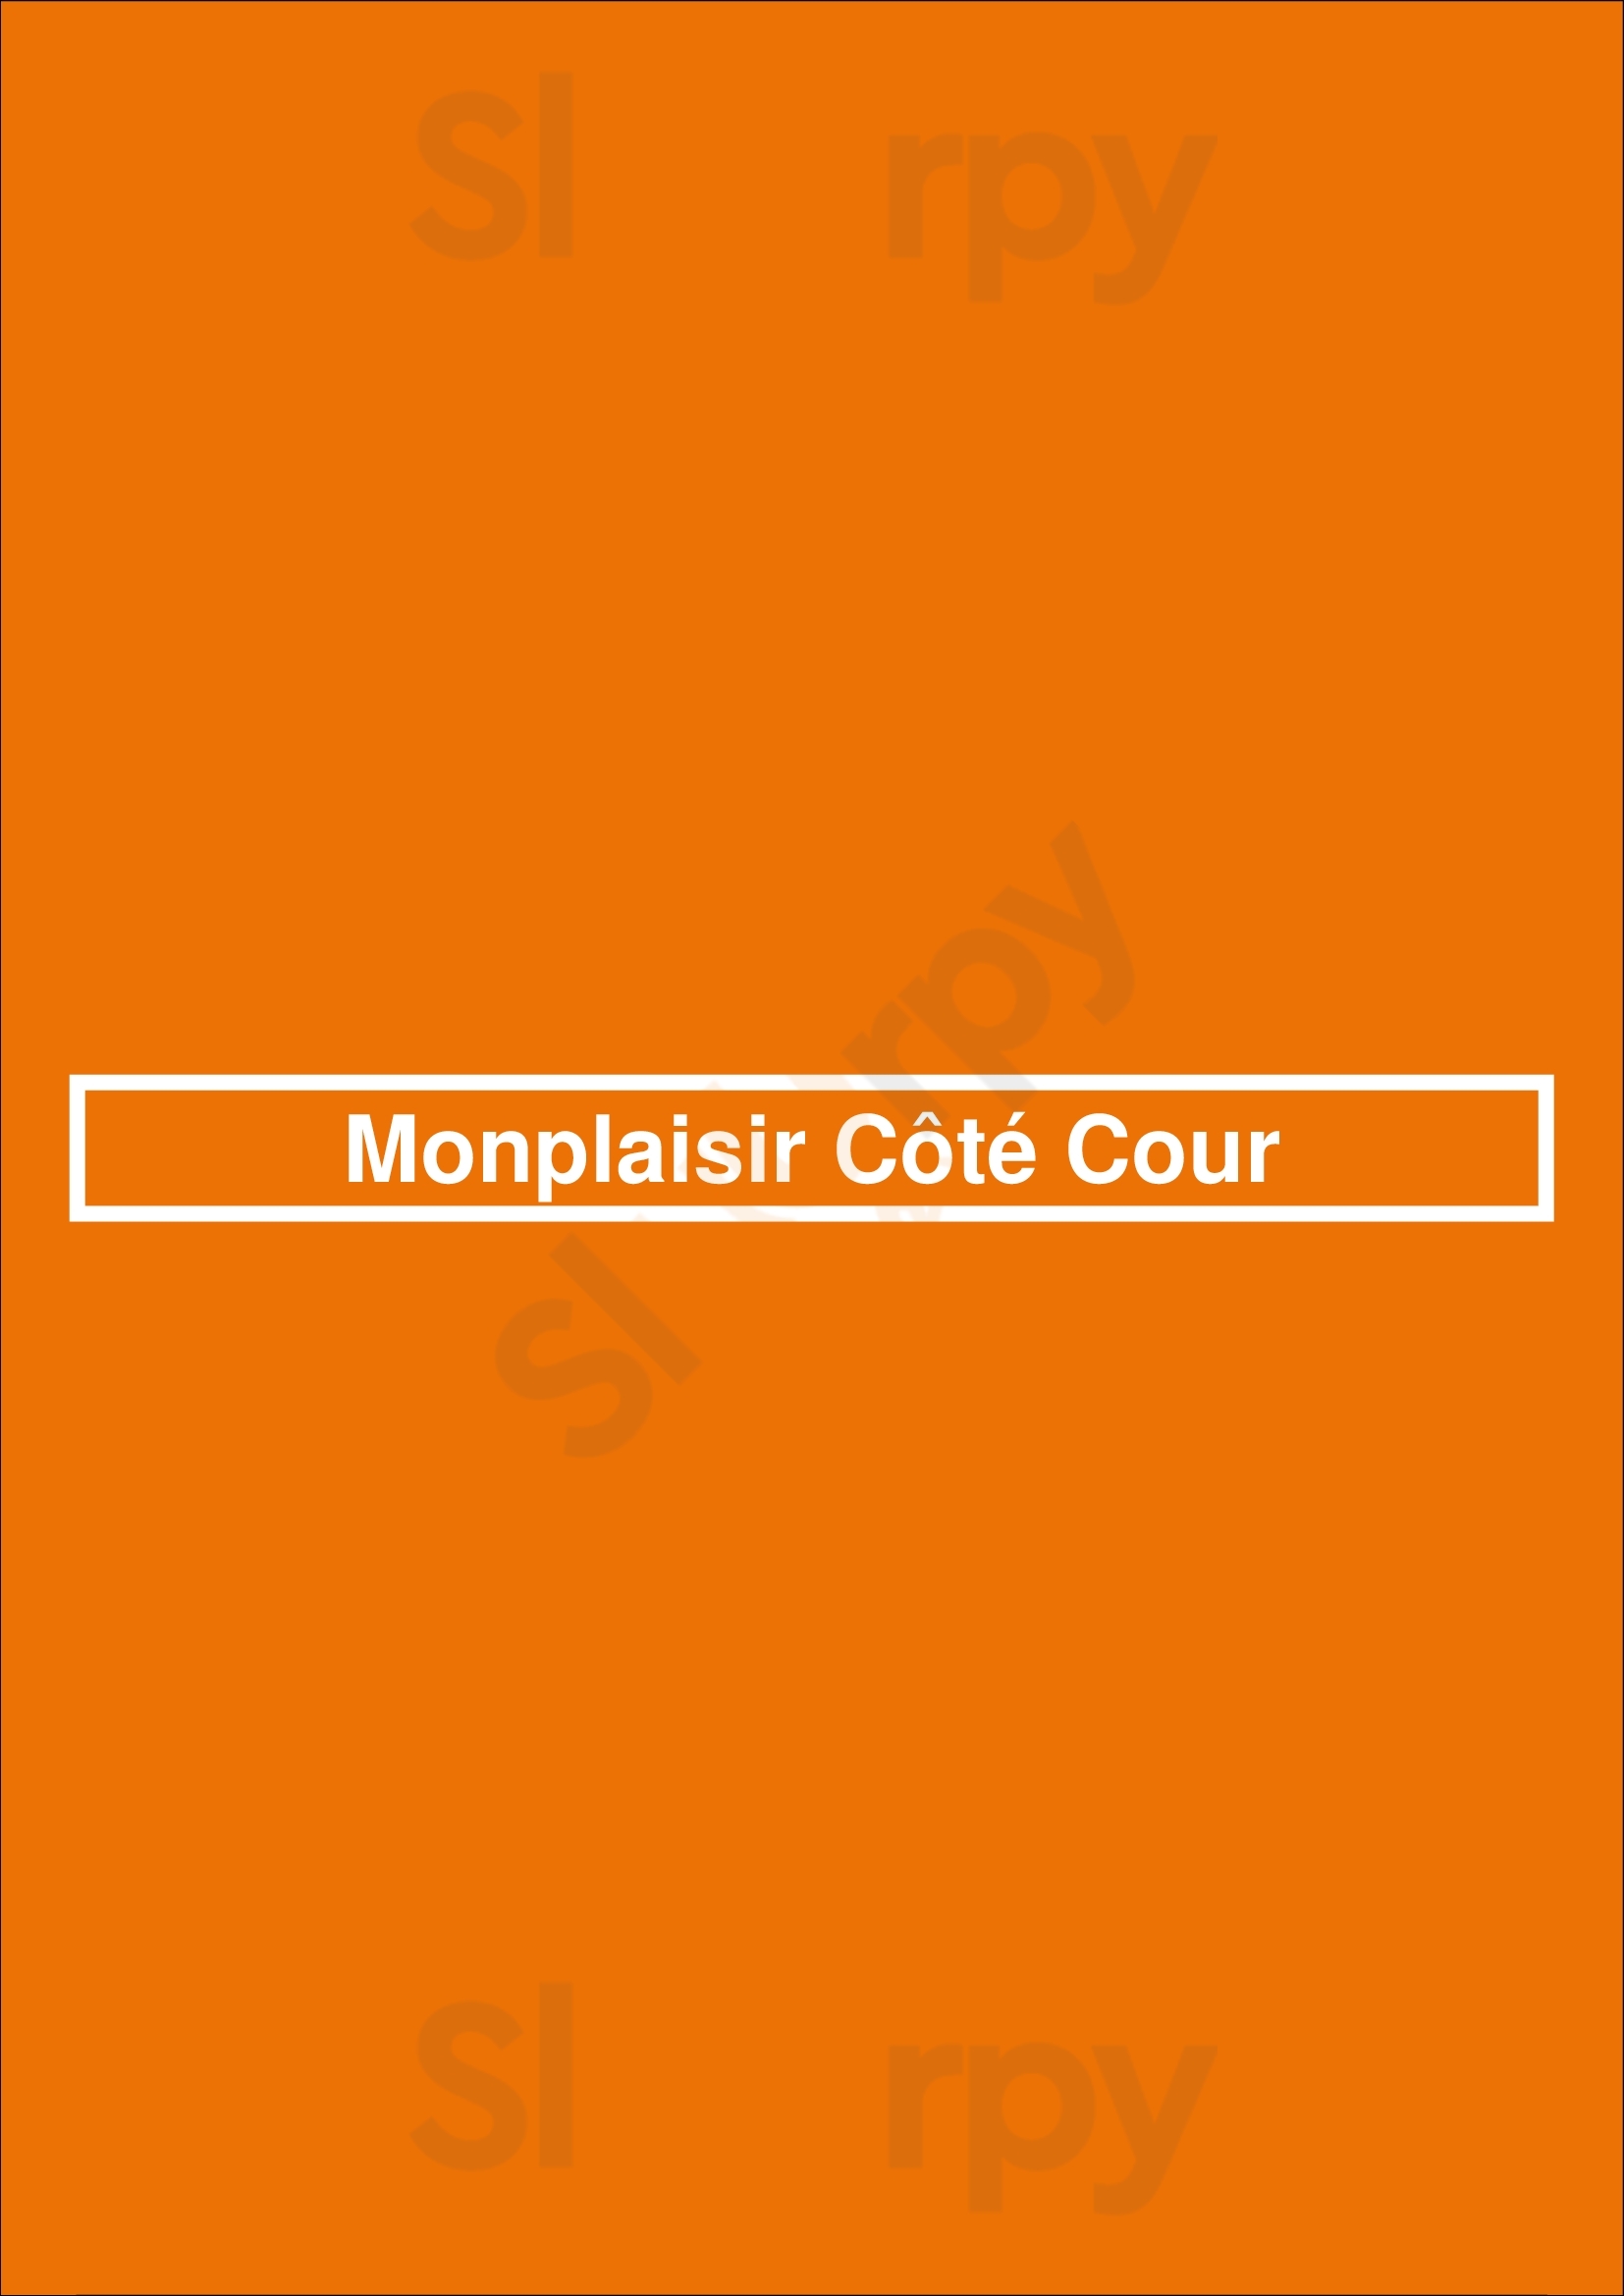 Monplaisir Côté Cour Lyon Menu - 1